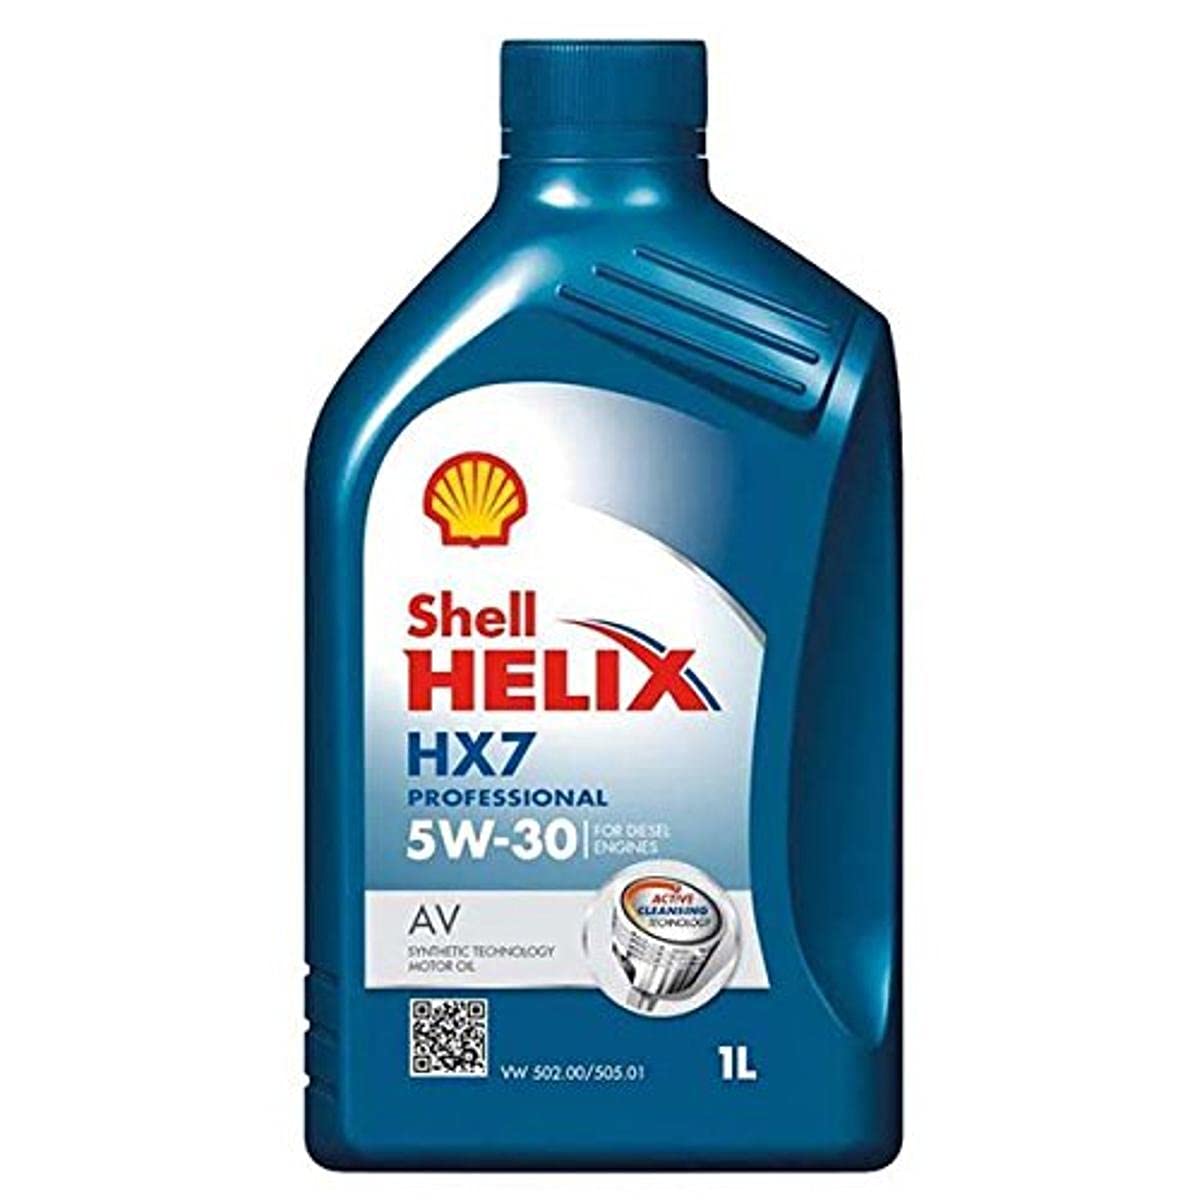 Shell Helix HX7 Professional AV 5W-30 1 Litre Can von Shell